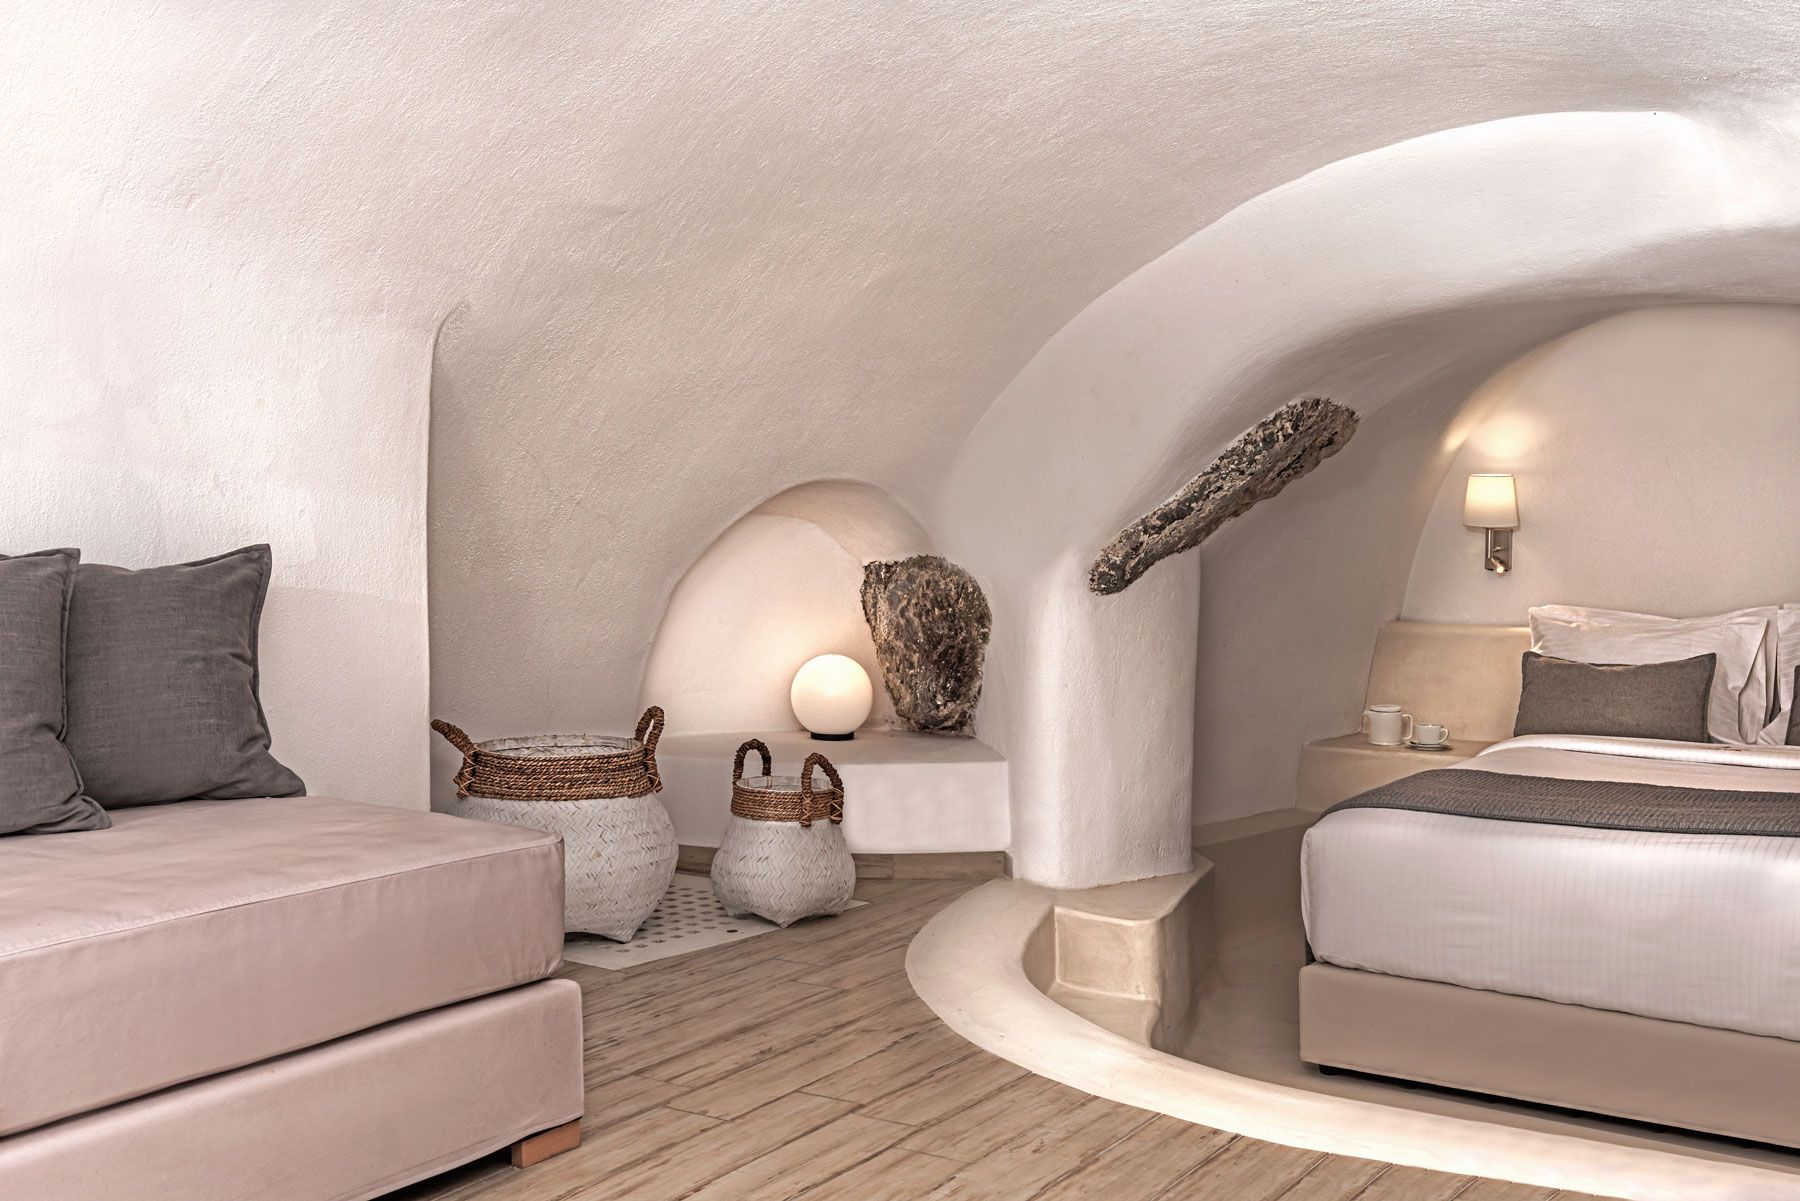 Aqua luxury suites Σουίτες στην Σαντορίνη Ημεροβίγλι, Εσωτερικός & Αρχιτεκτονικός σχεδιασμός πολυτελών σουιτών με ιδιωτική πισίν